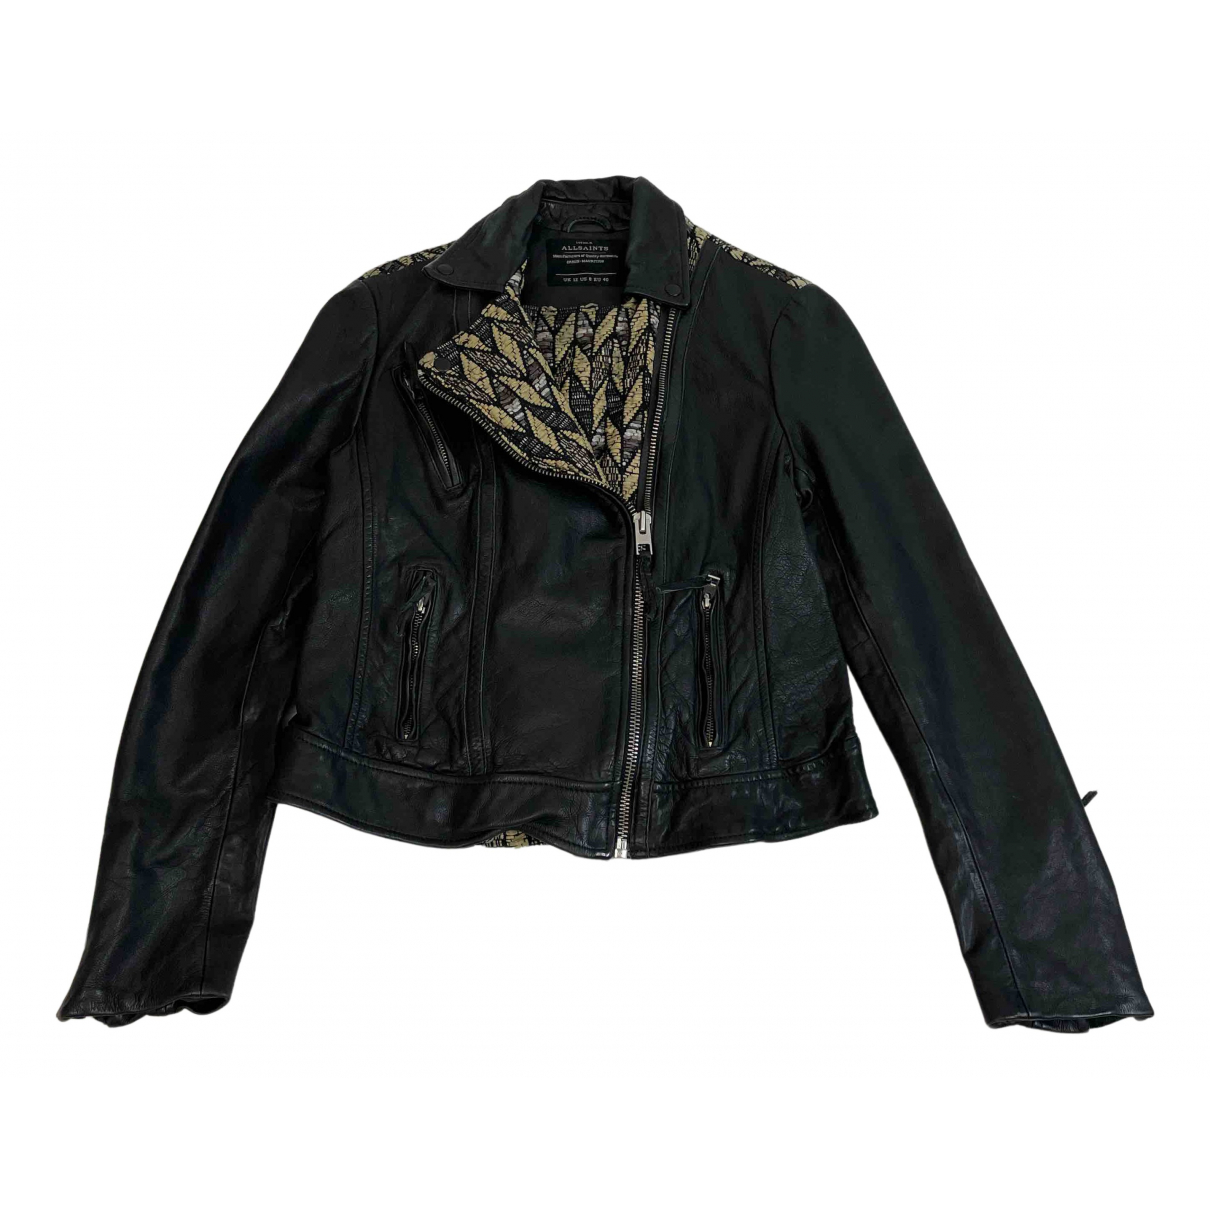 Leather biker jacket 4 years warranty Max 89% OFF